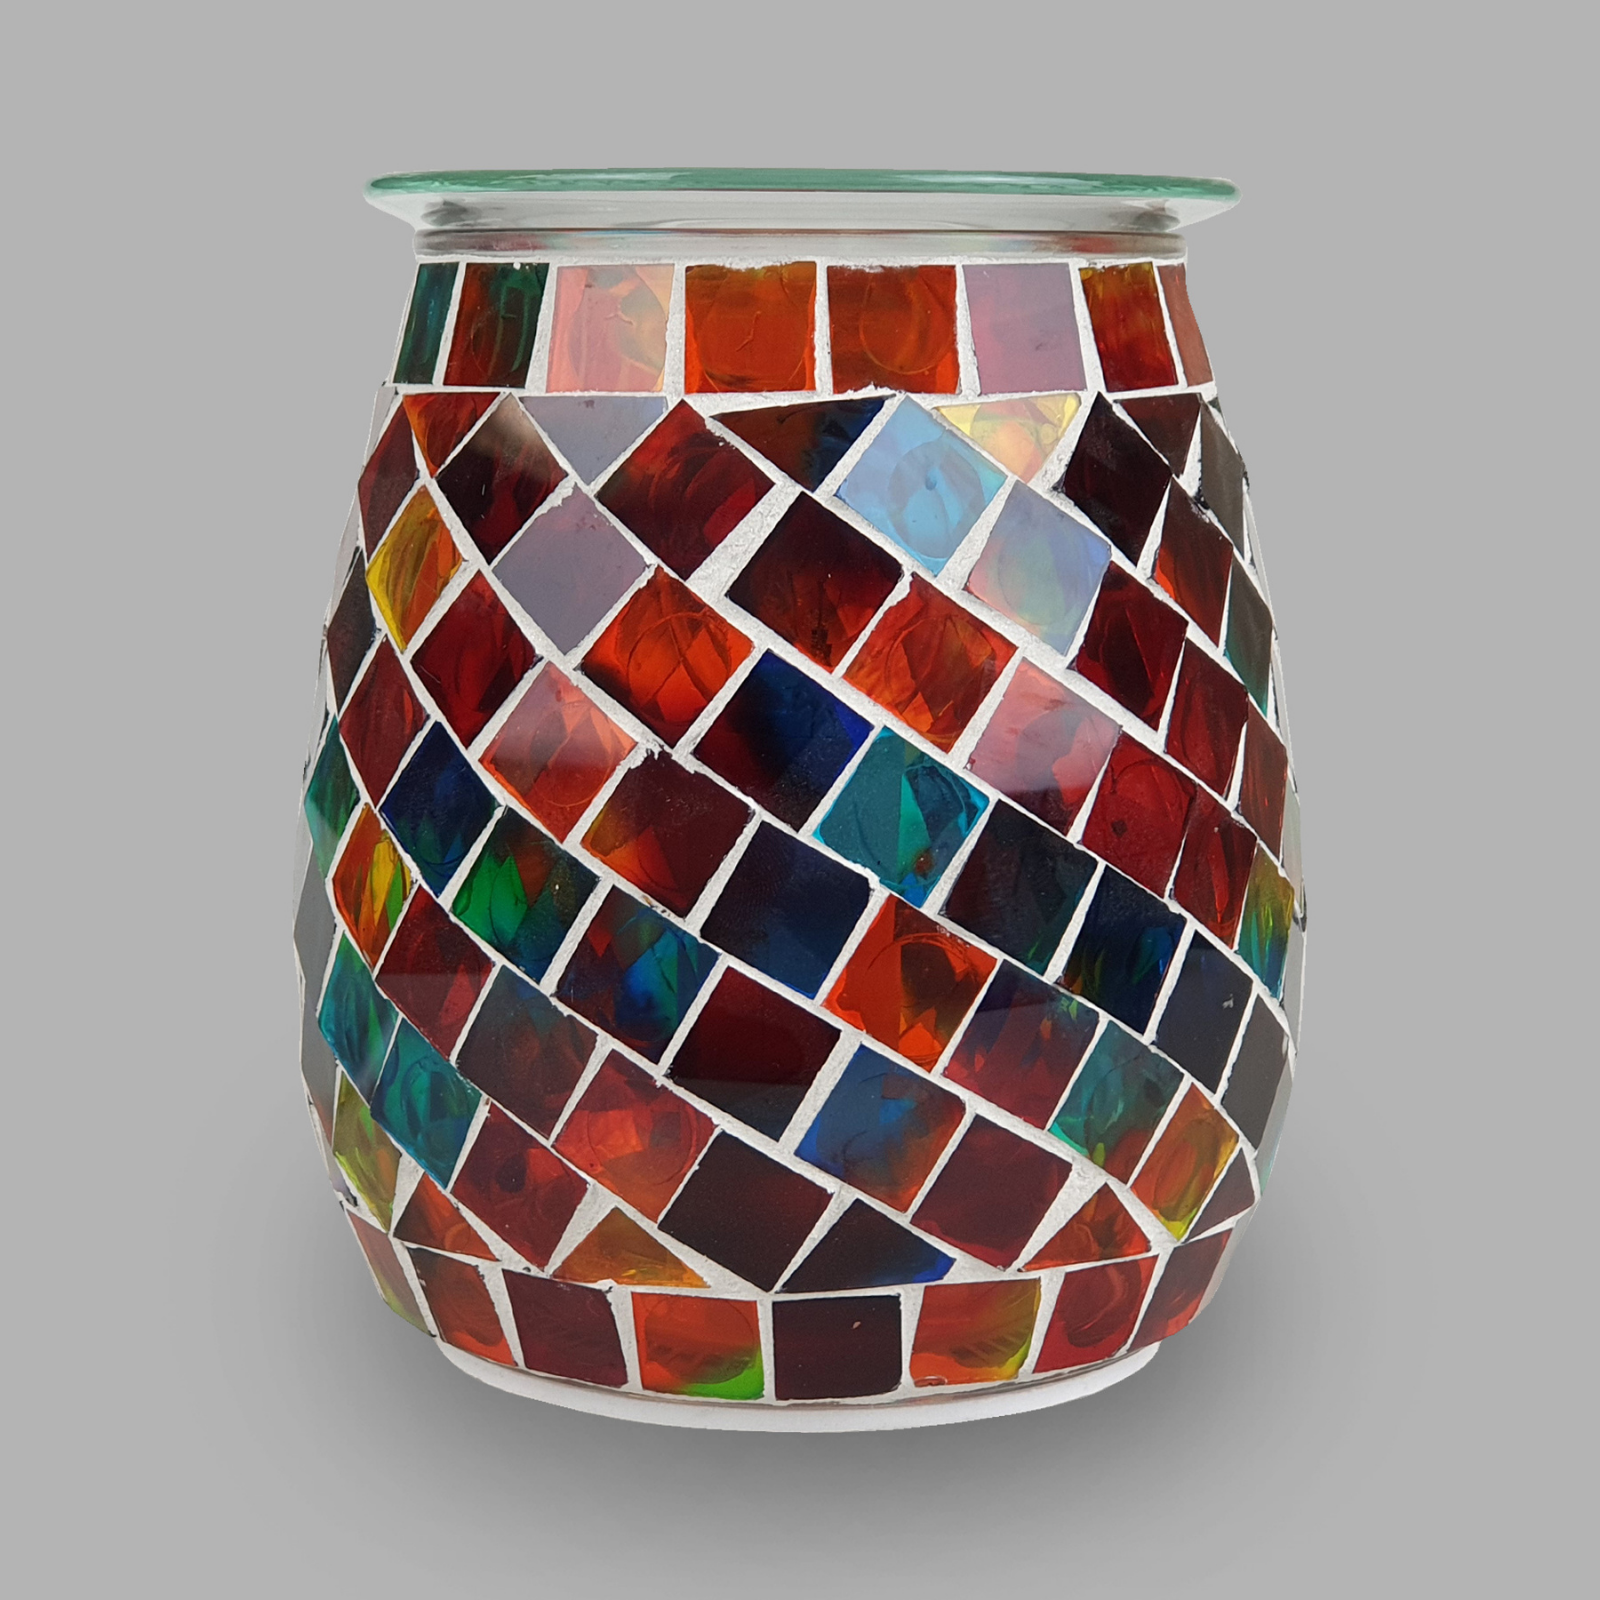 Electric Wax Burner - Mosaic Glass Rainbow